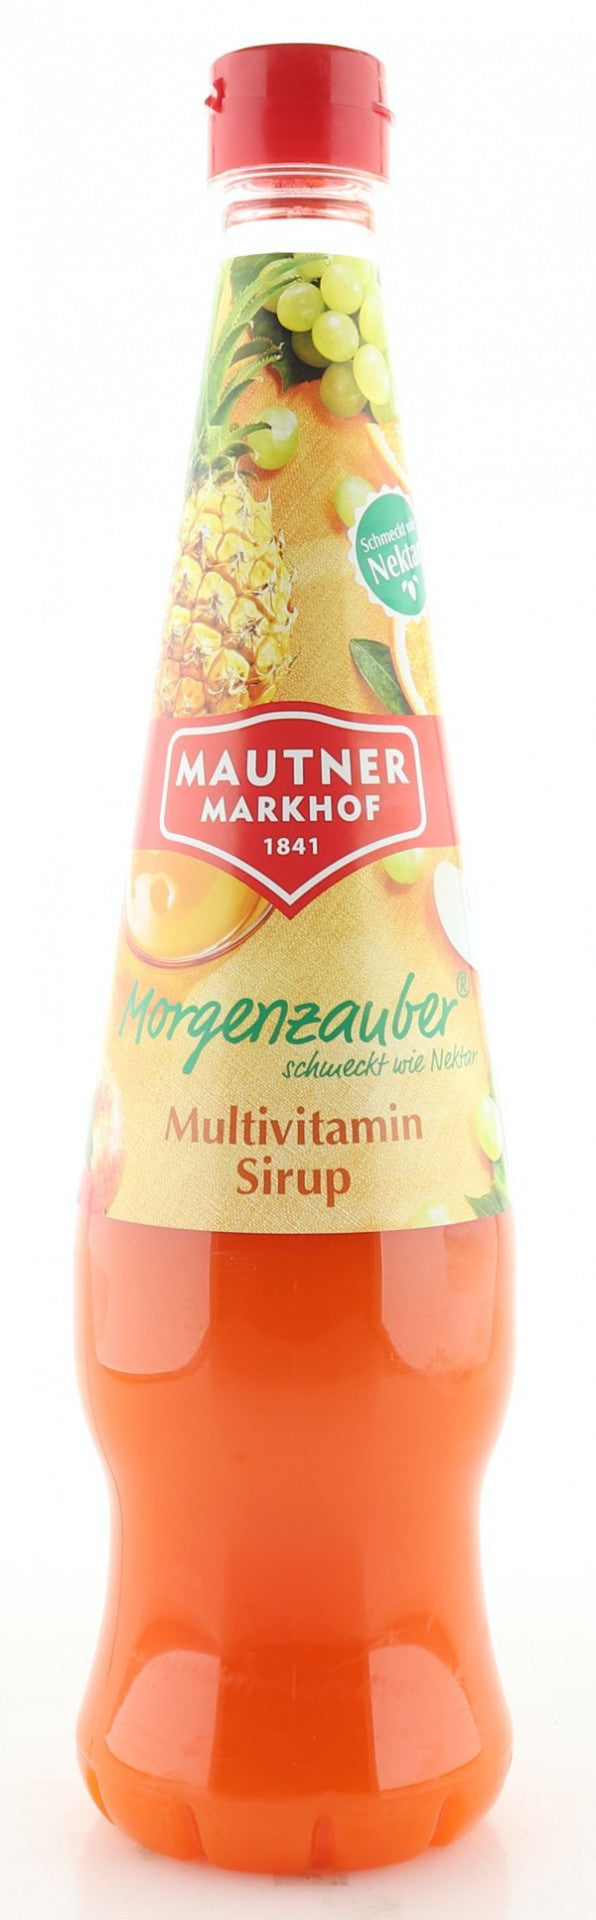 Mautner Markhof Morgenzauber Sirup Multivitamin